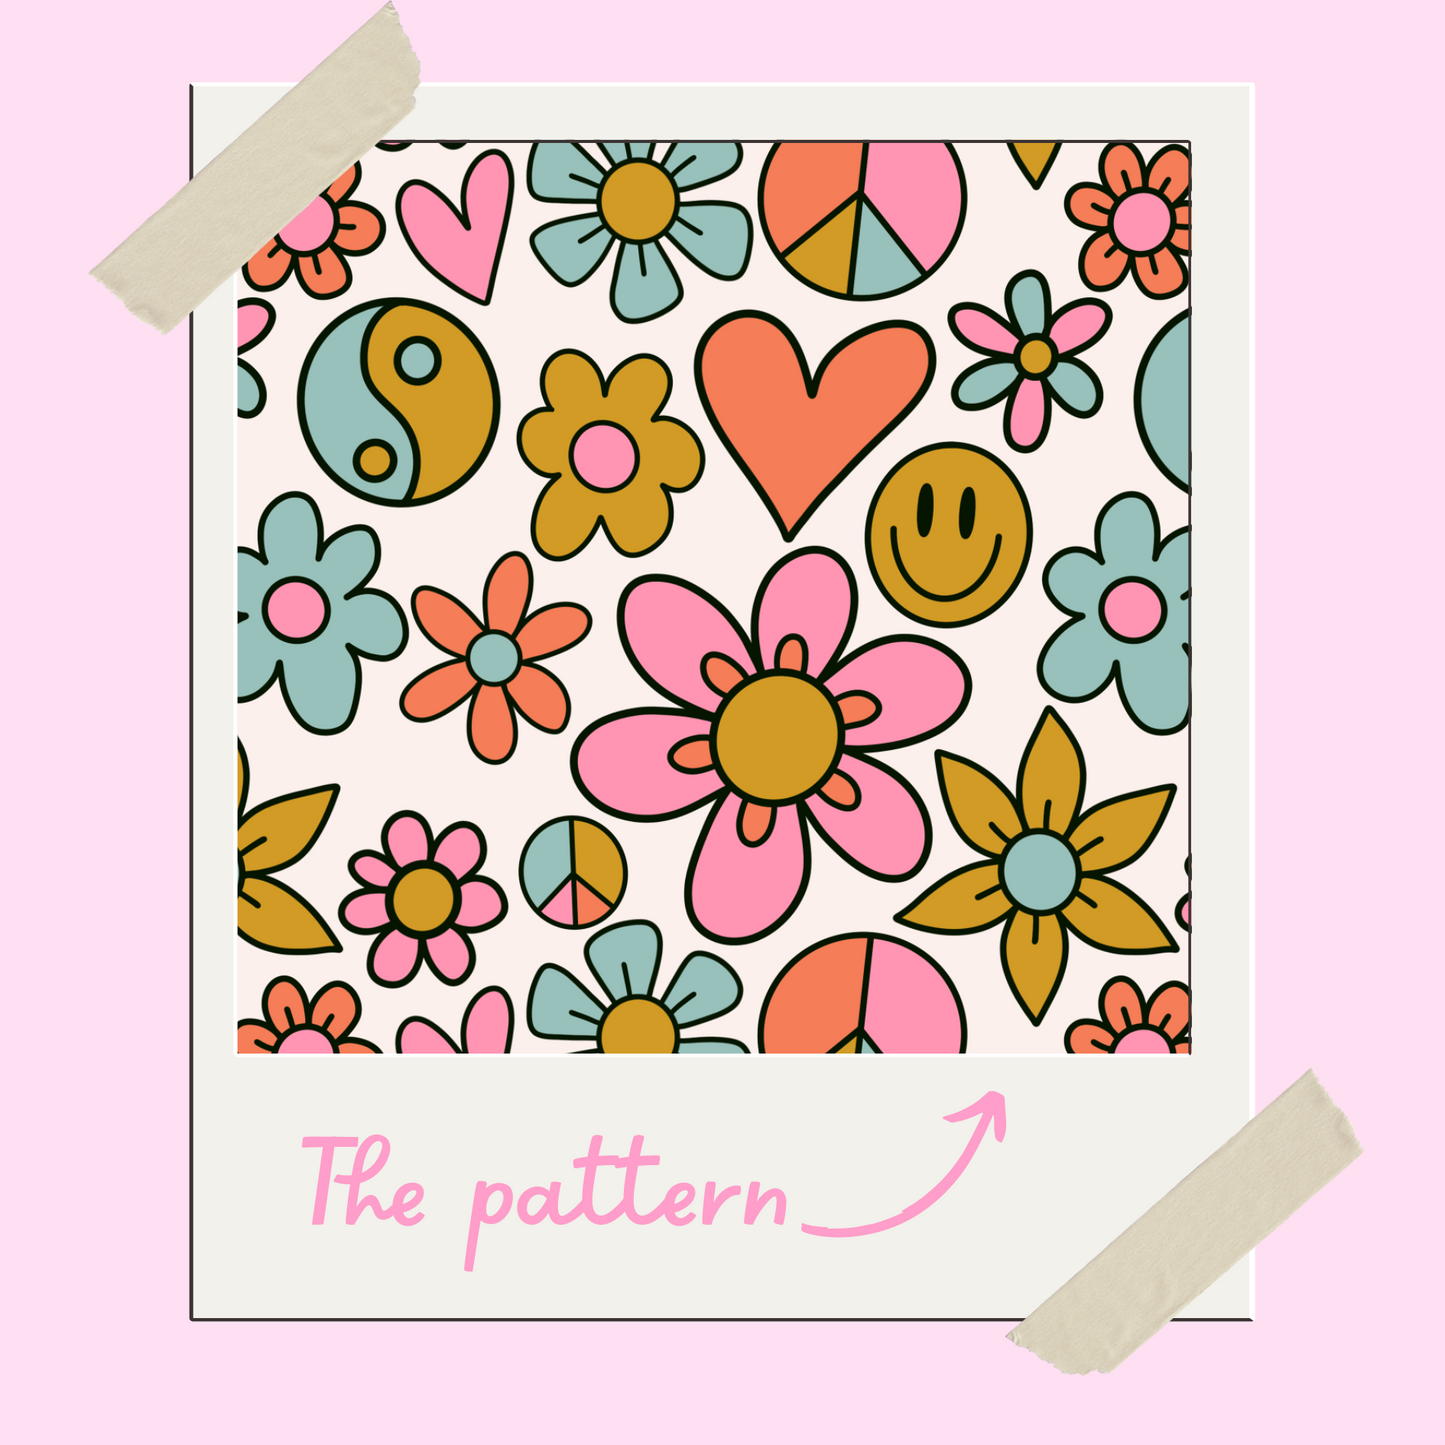 Satin Scrunchie - Funky Floral Pattern